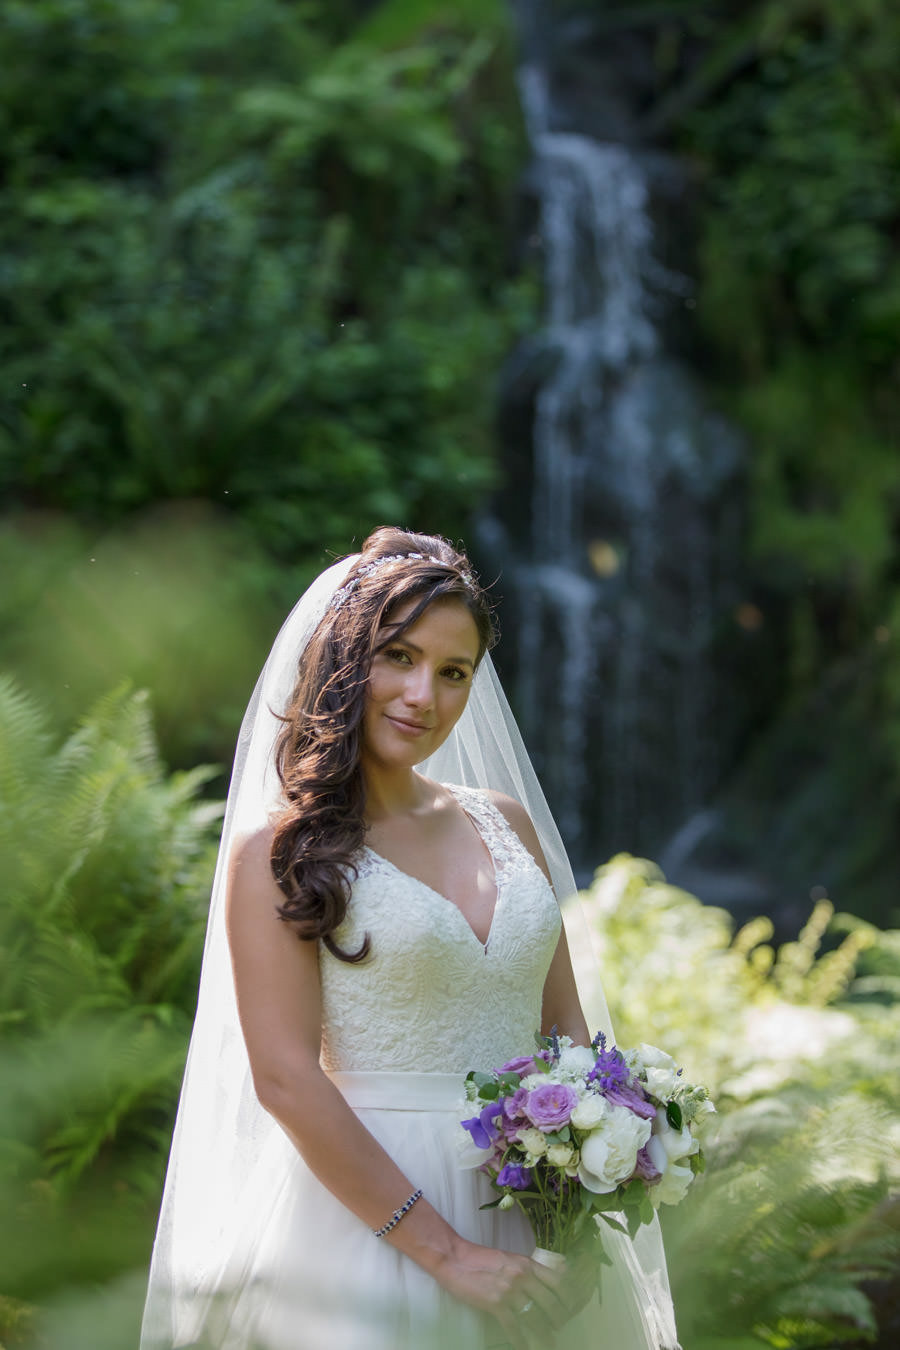 Brides portrait at Hestercombe Gardens cascade Somerset